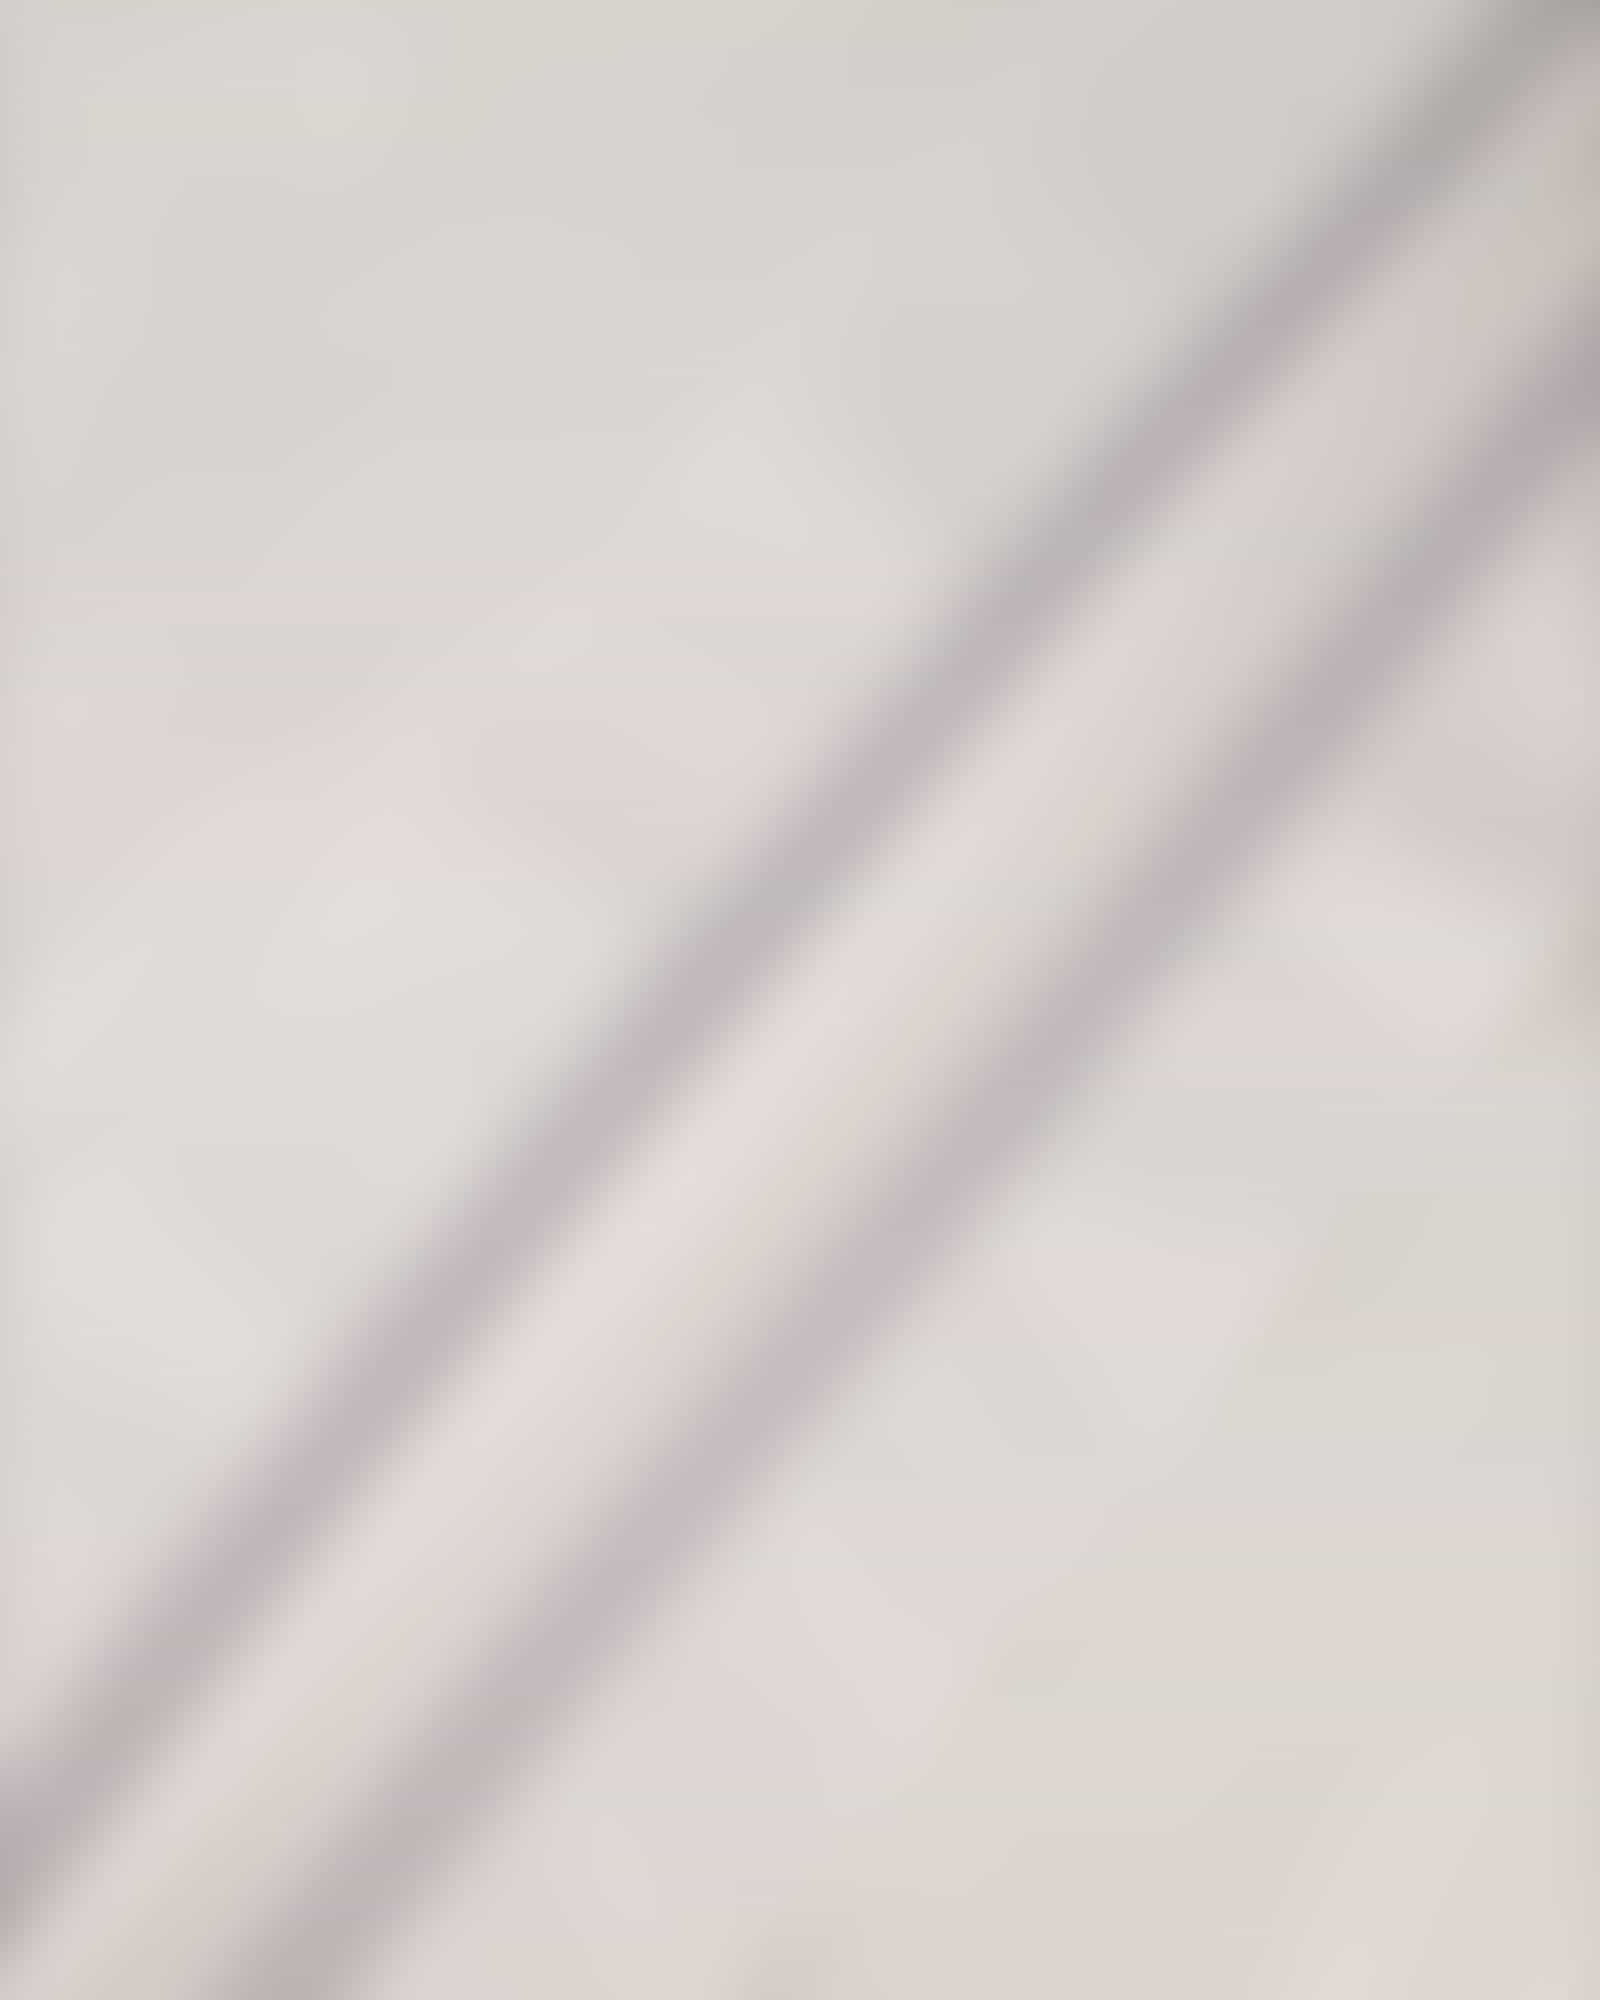 JOOP Herren Bademantel Kimono Pique 1656 - Farbe: Weiß - 600 - M